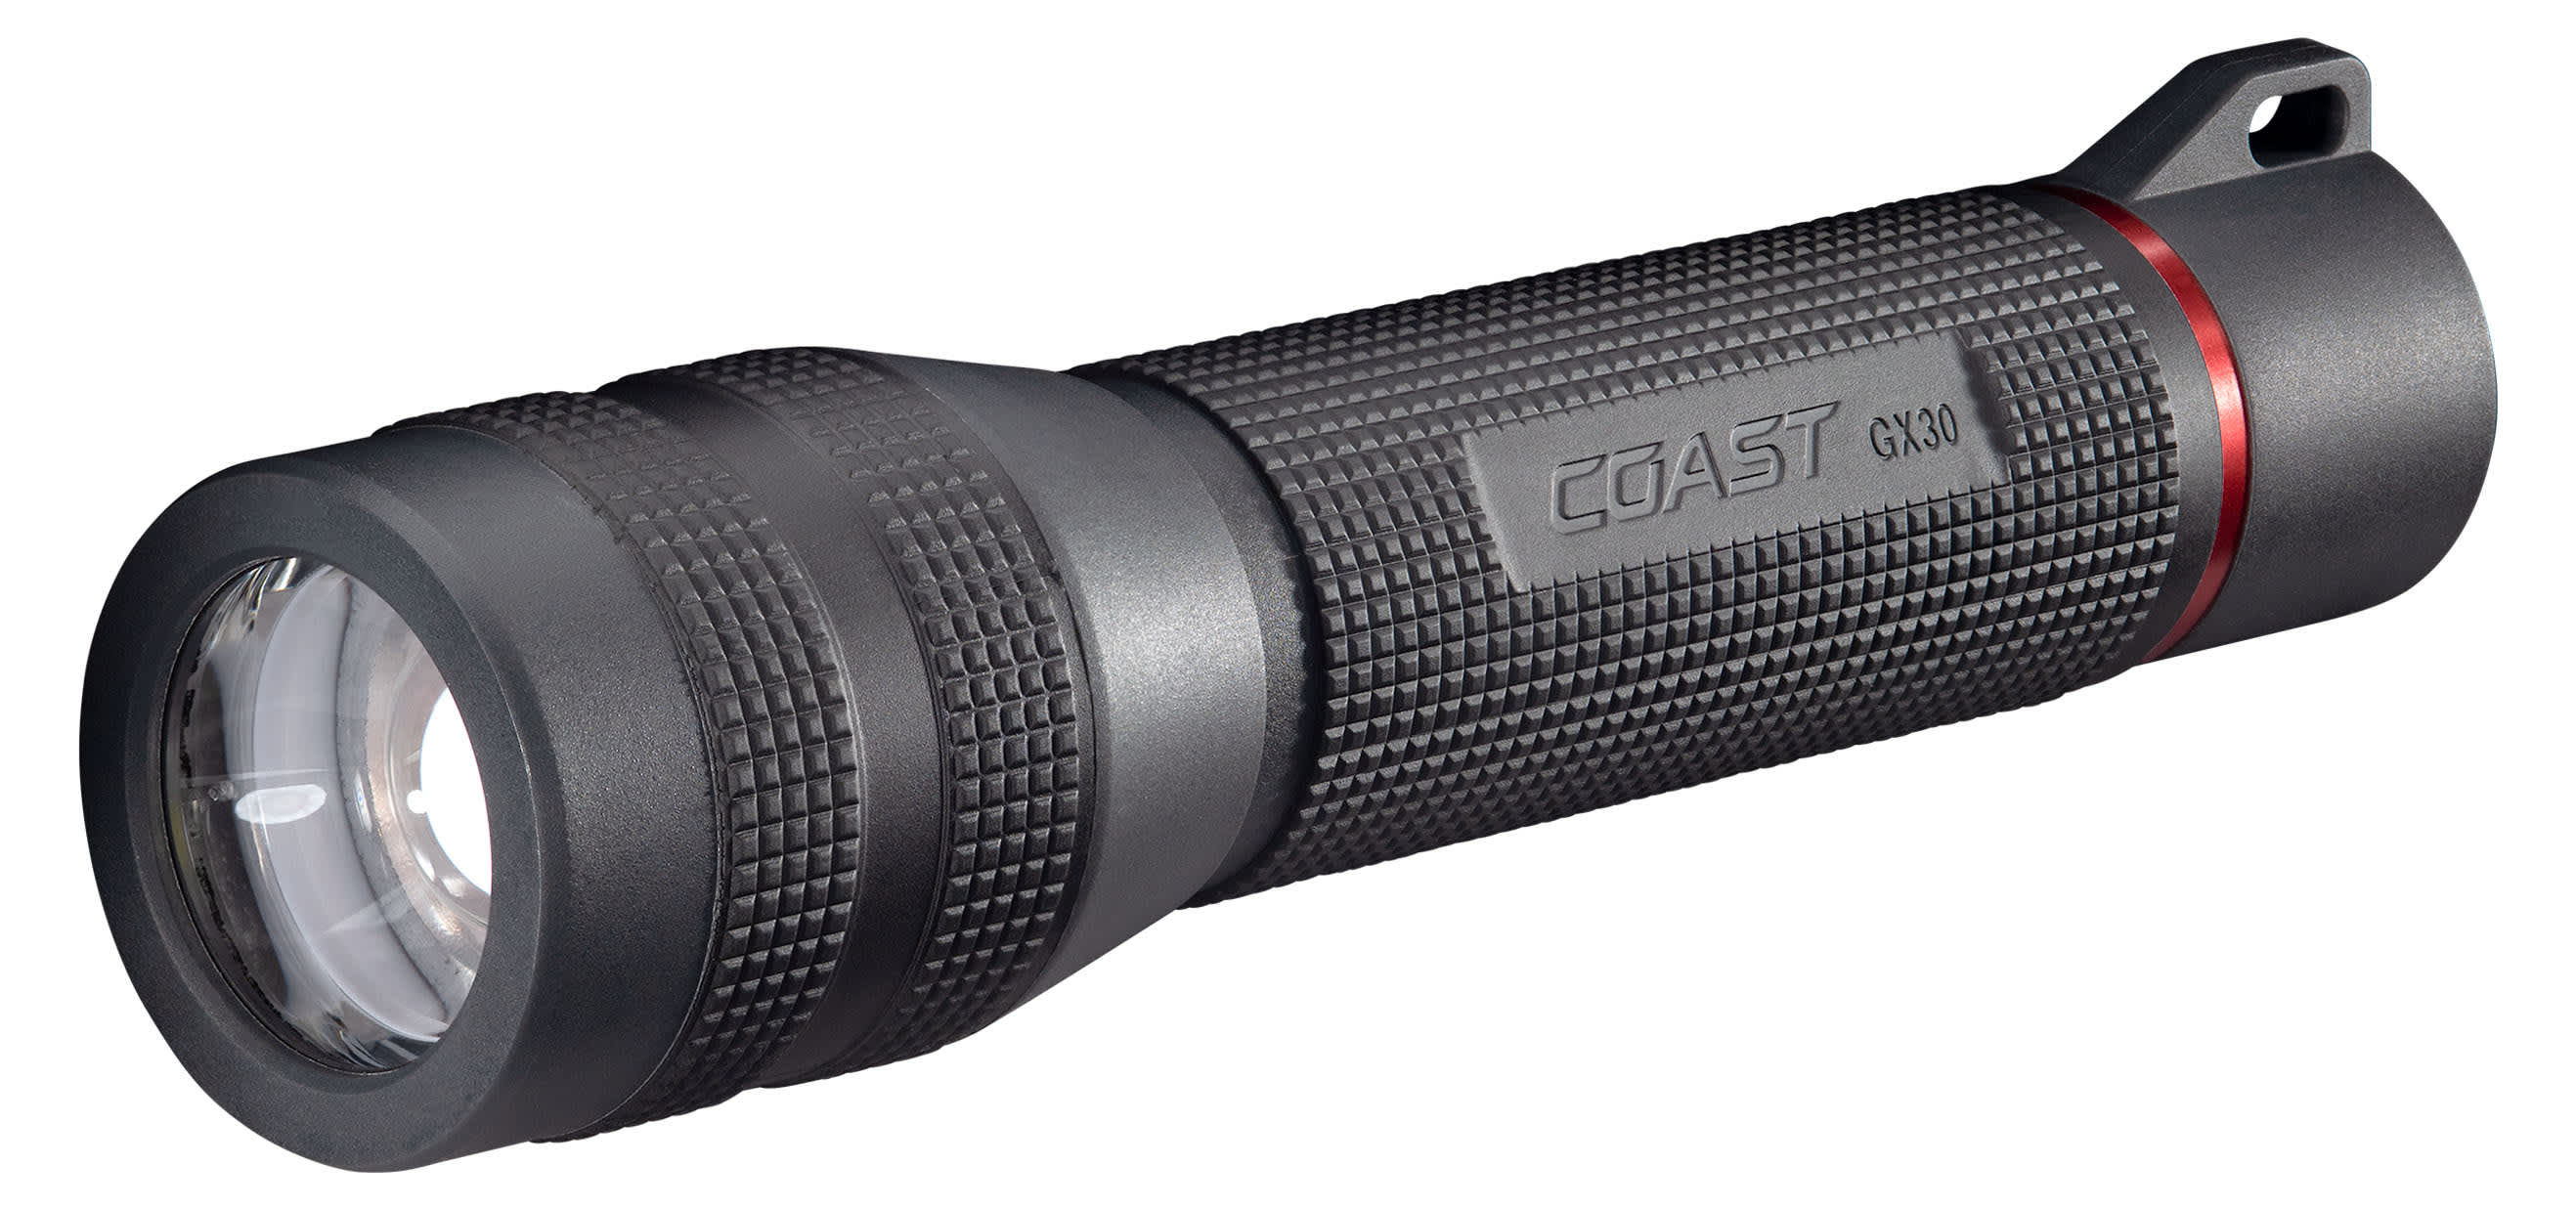 Coast GX30 Flashlight